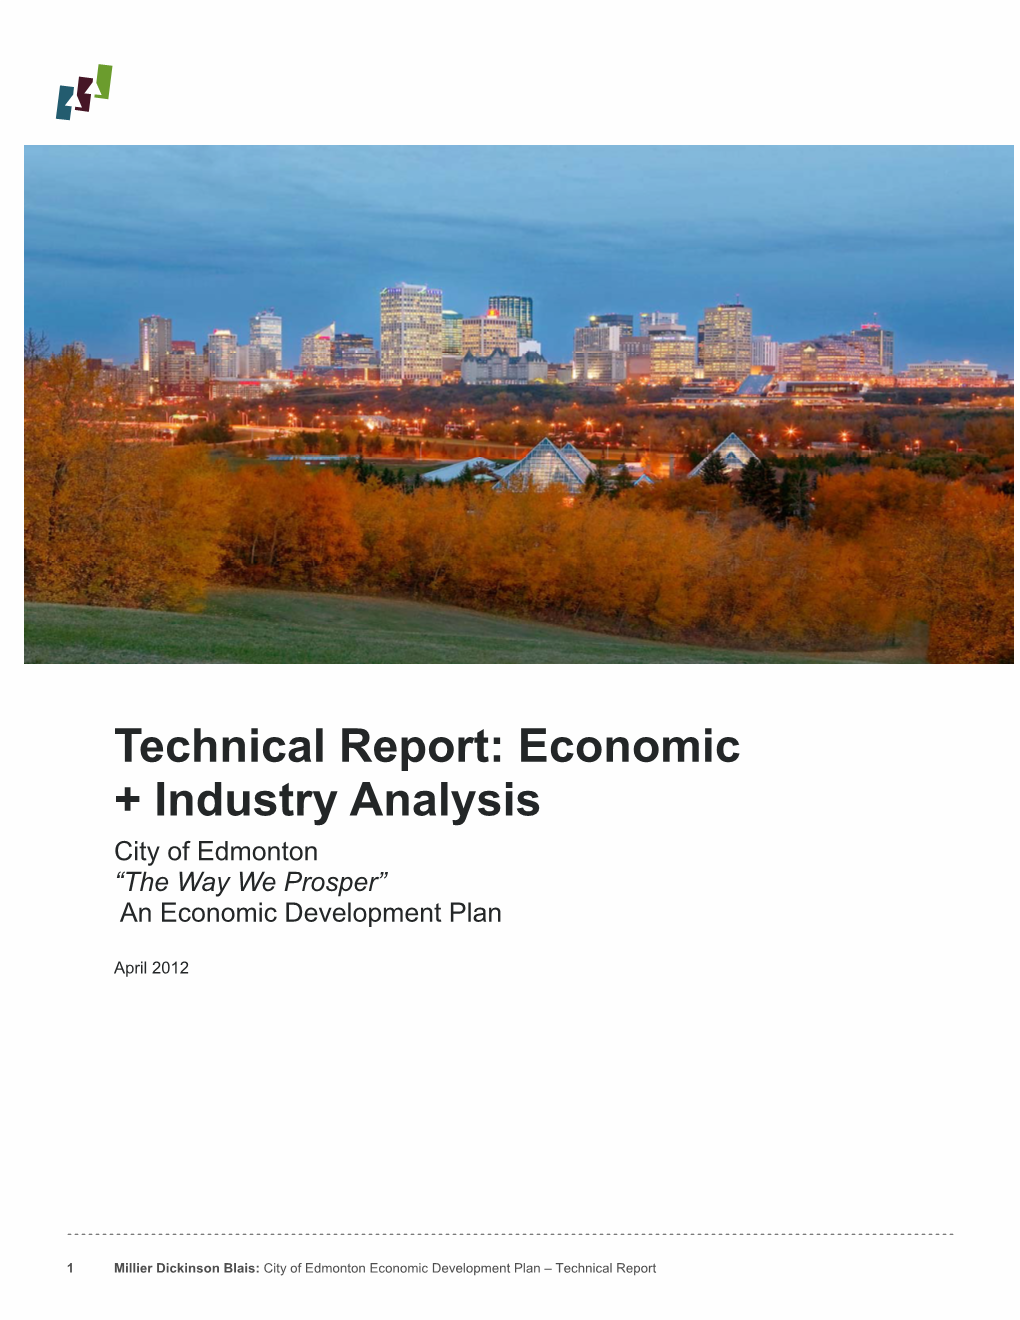 Technical Report: Economic + Industry Analysis City of Edmonton “The Way We Prosper” an Economic Development Plan